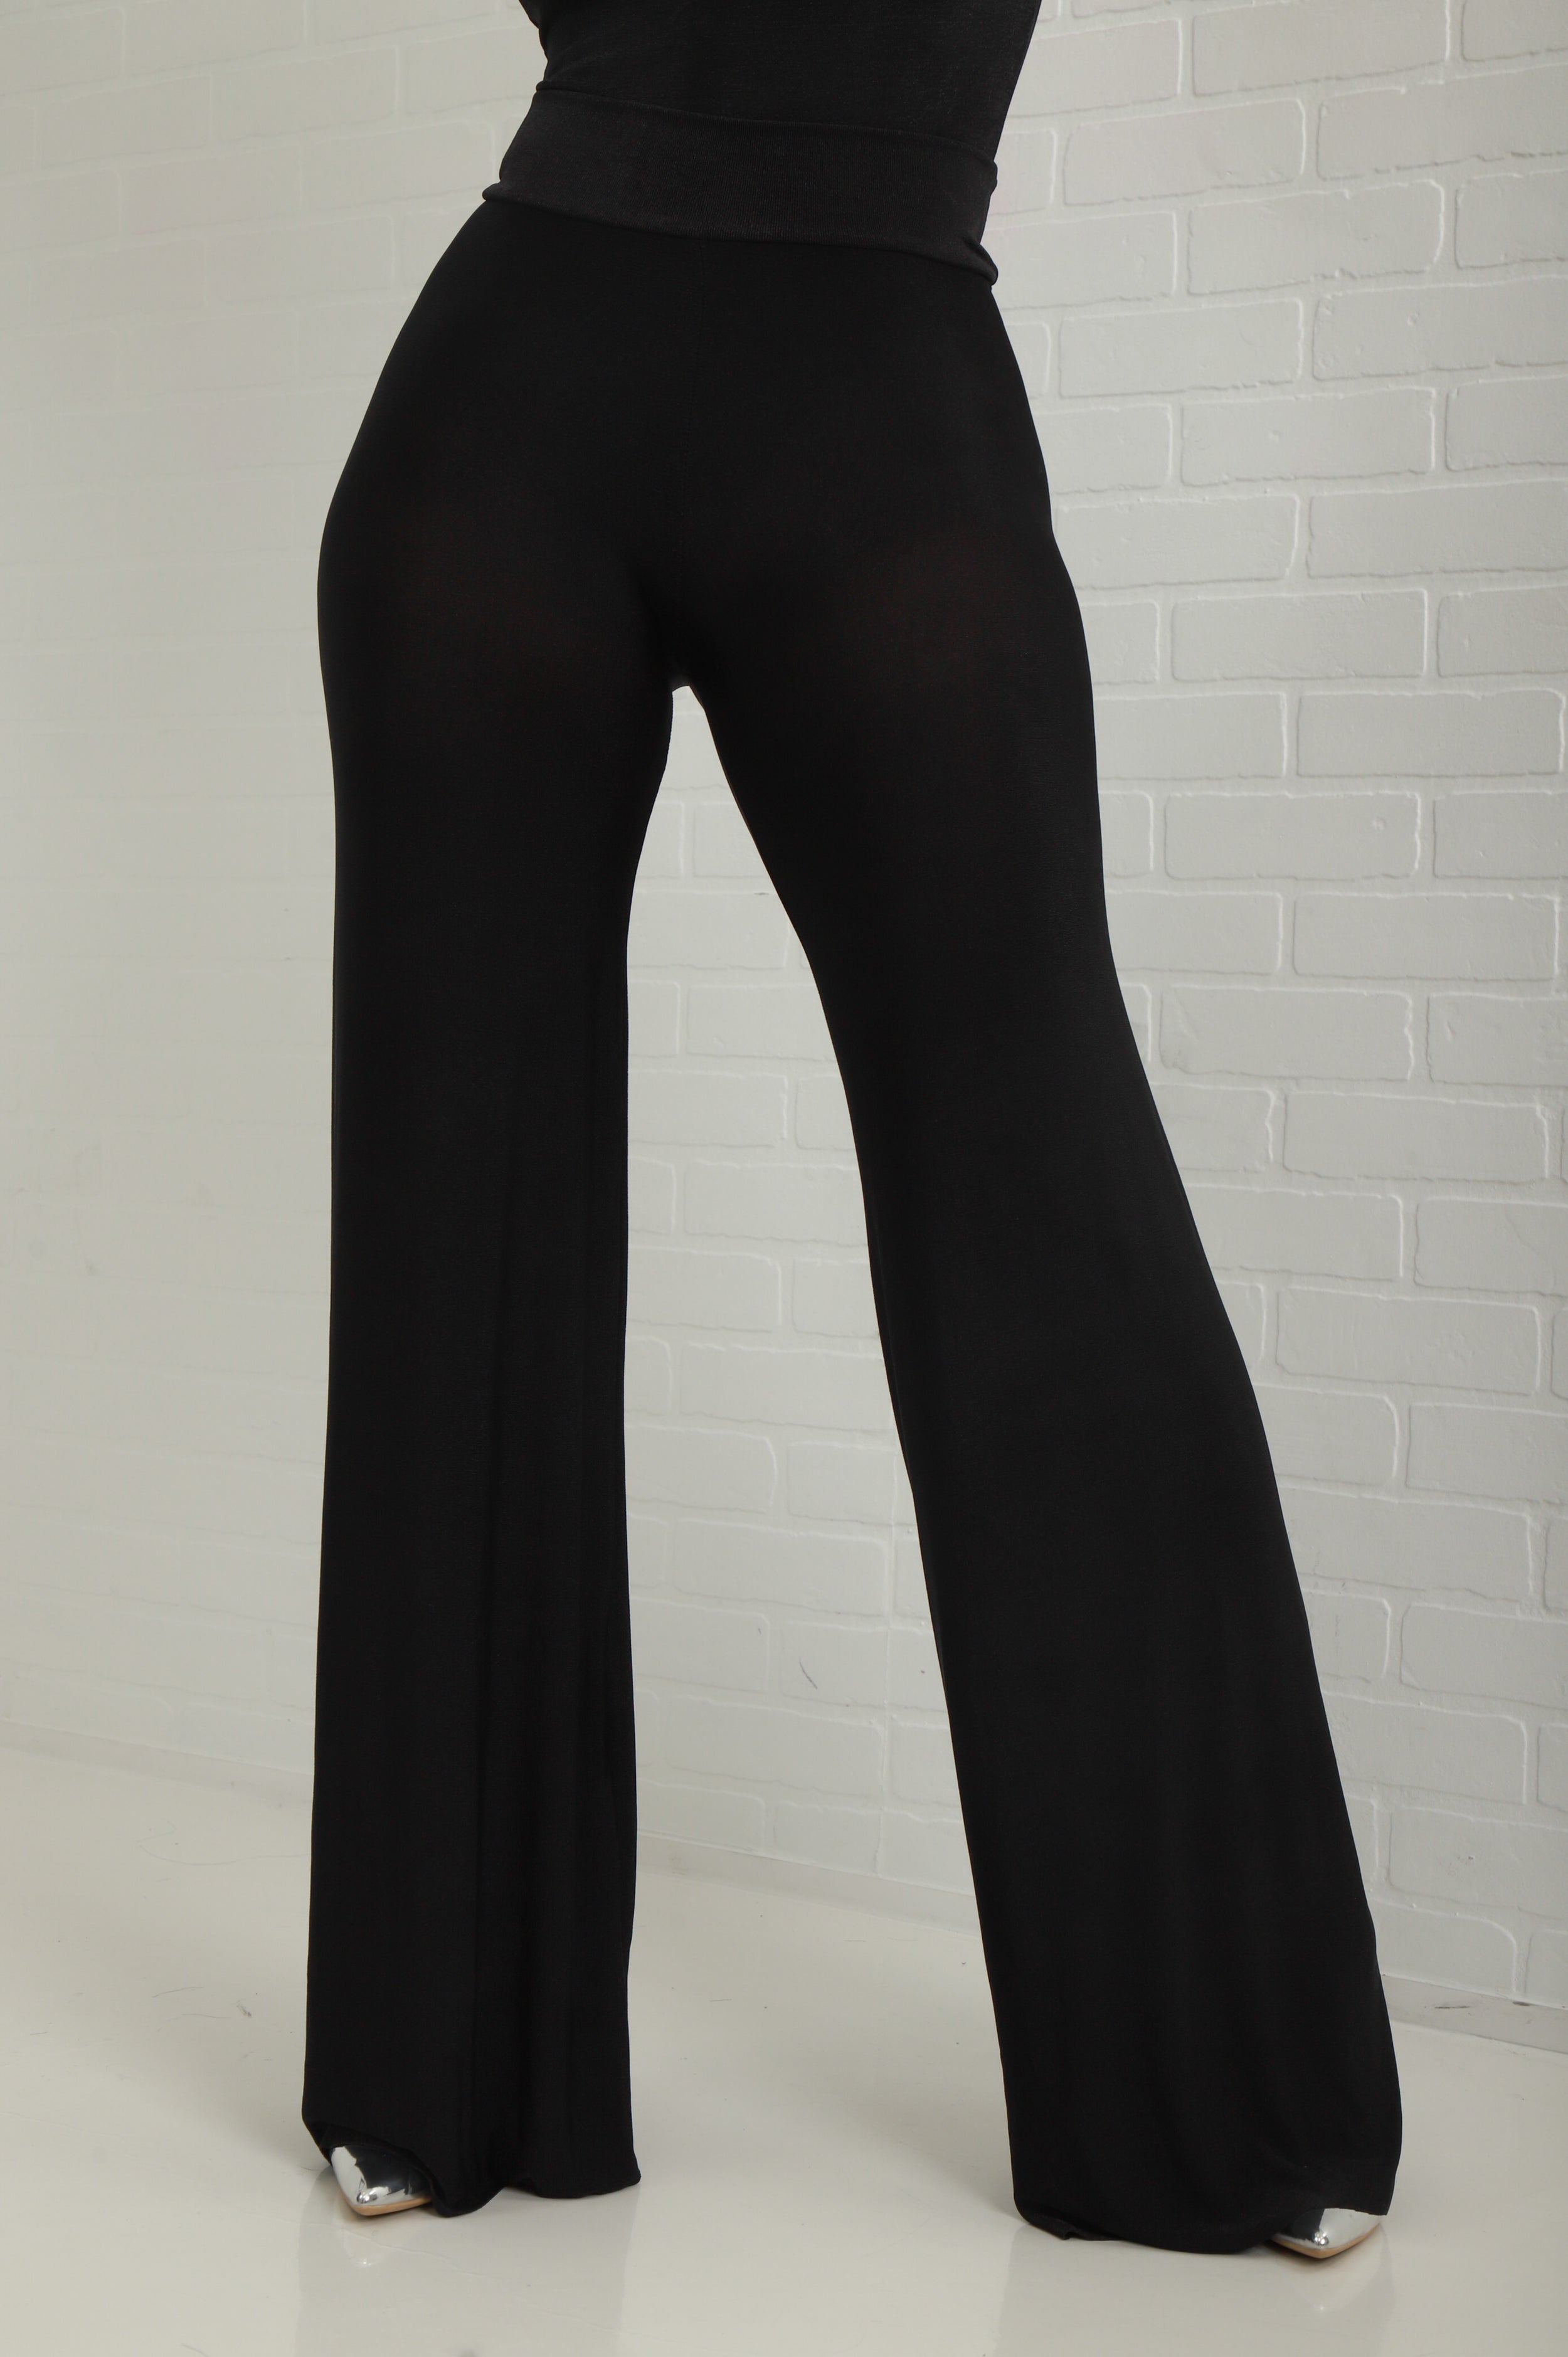 Buy Black Flared Pants Online - Shop for W